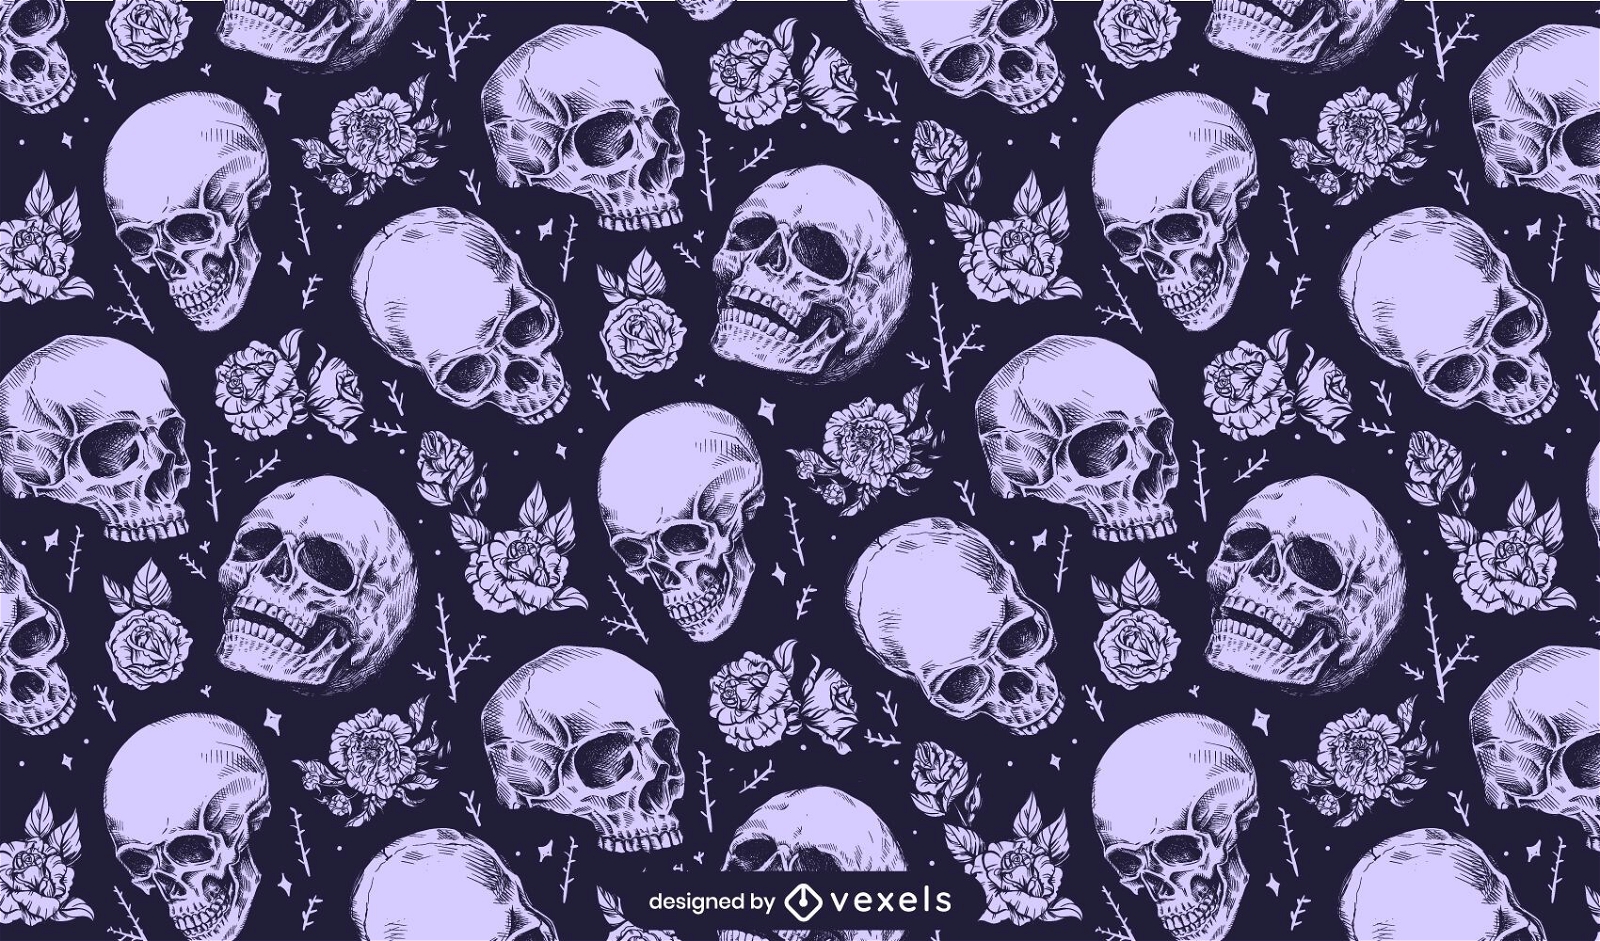 Skulls with flowers pattern design